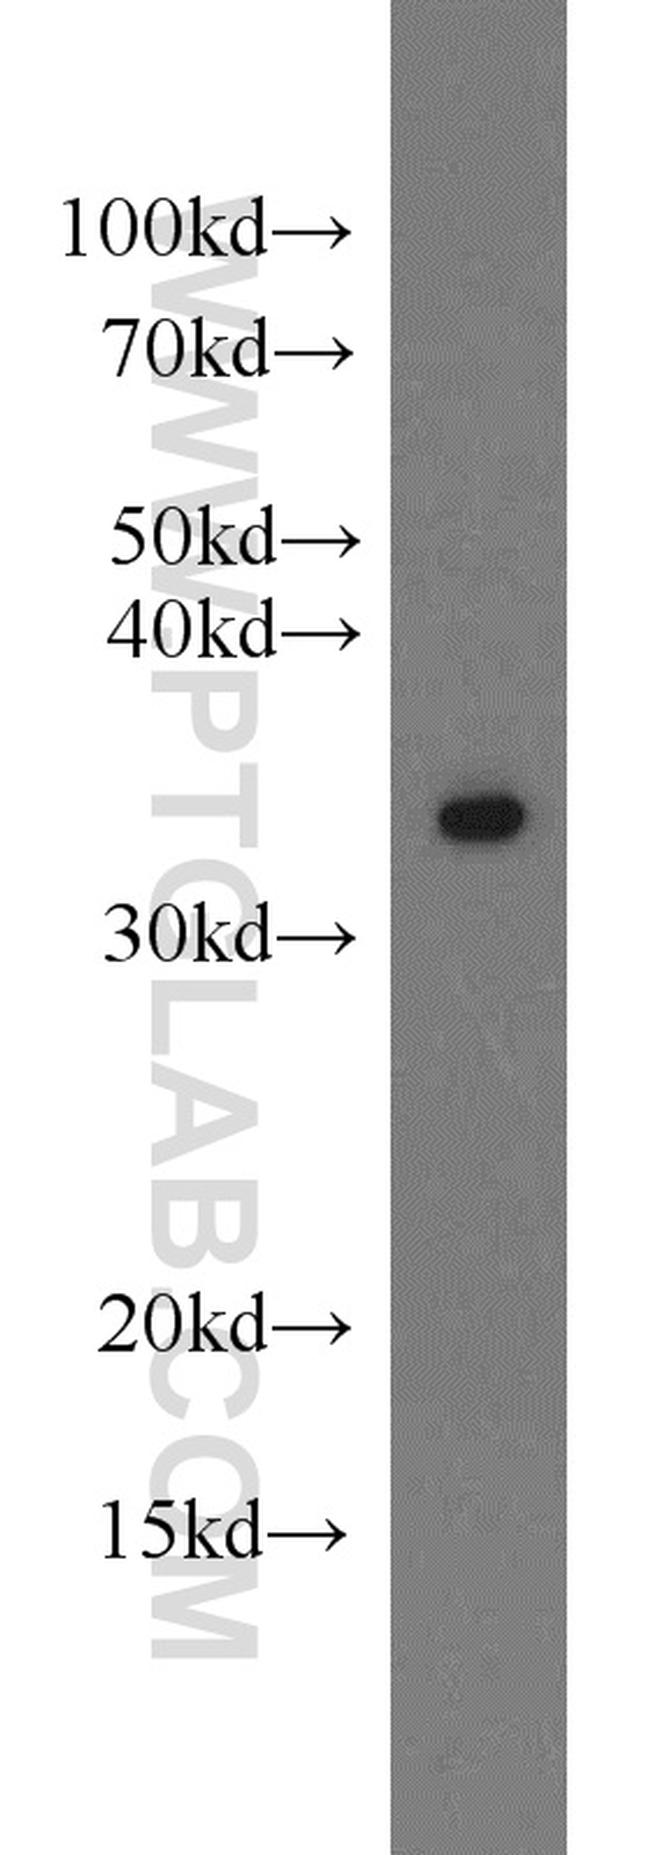 MBD3 Antibody in Western Blot (WB)